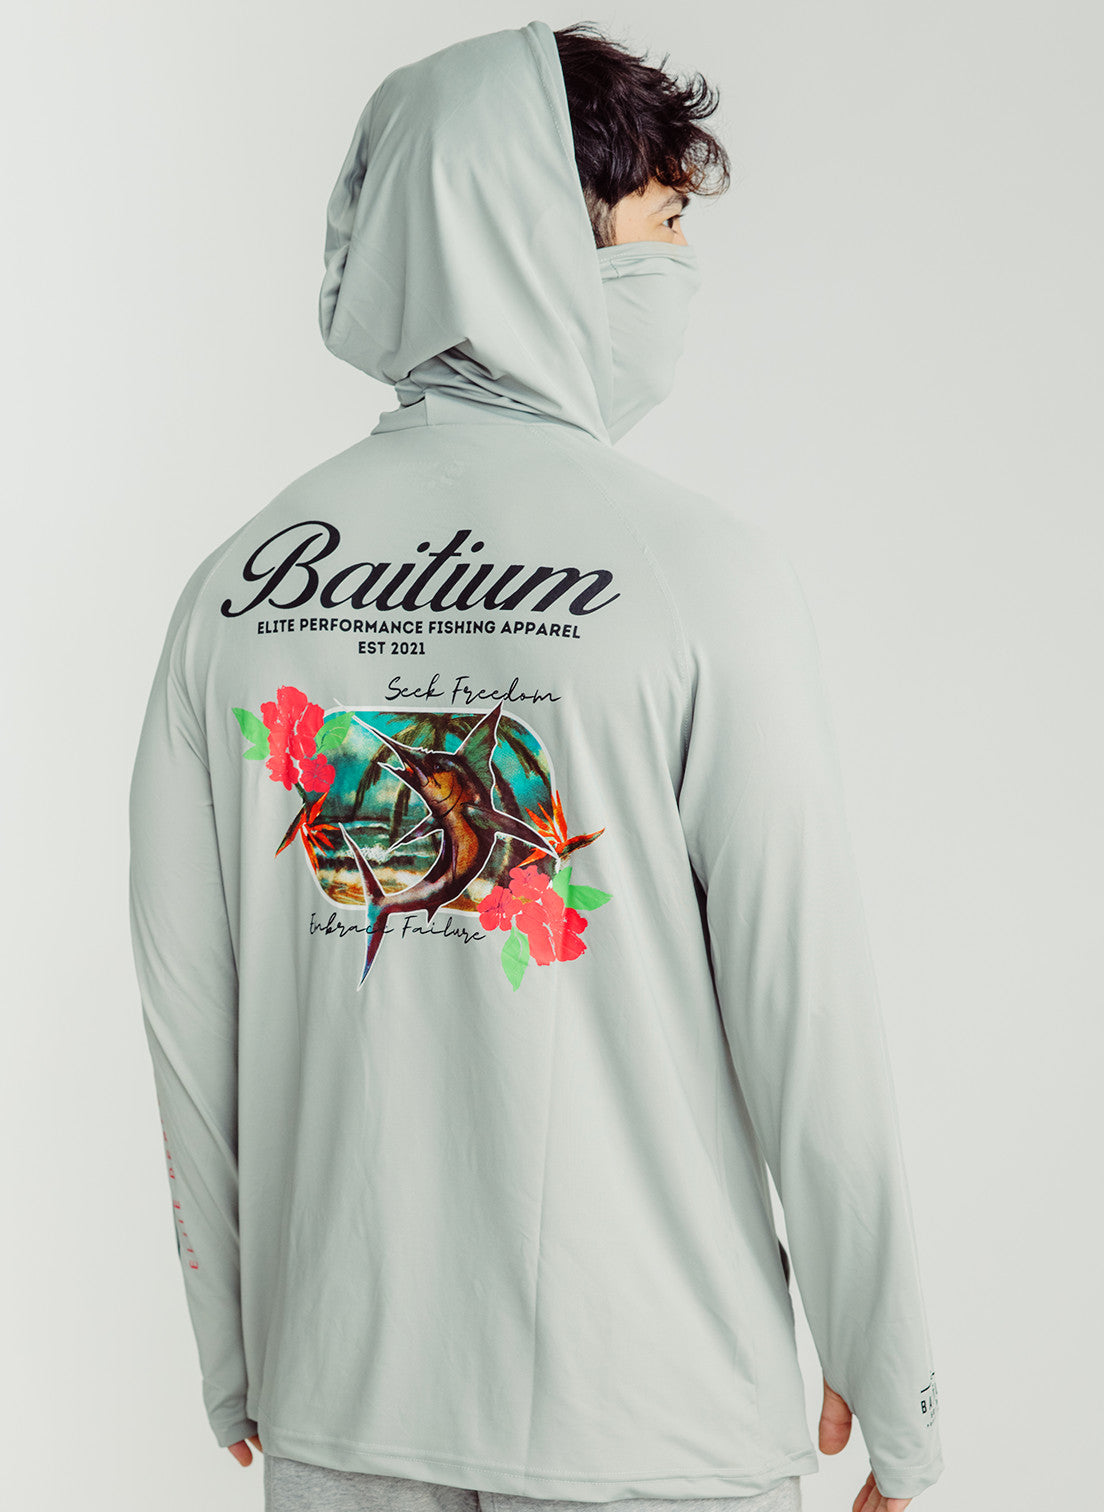 Baitium Original Hooded UPF 50+ PFG Long Sleeves Fishing Shirts. The Tropical Marlin / Medium